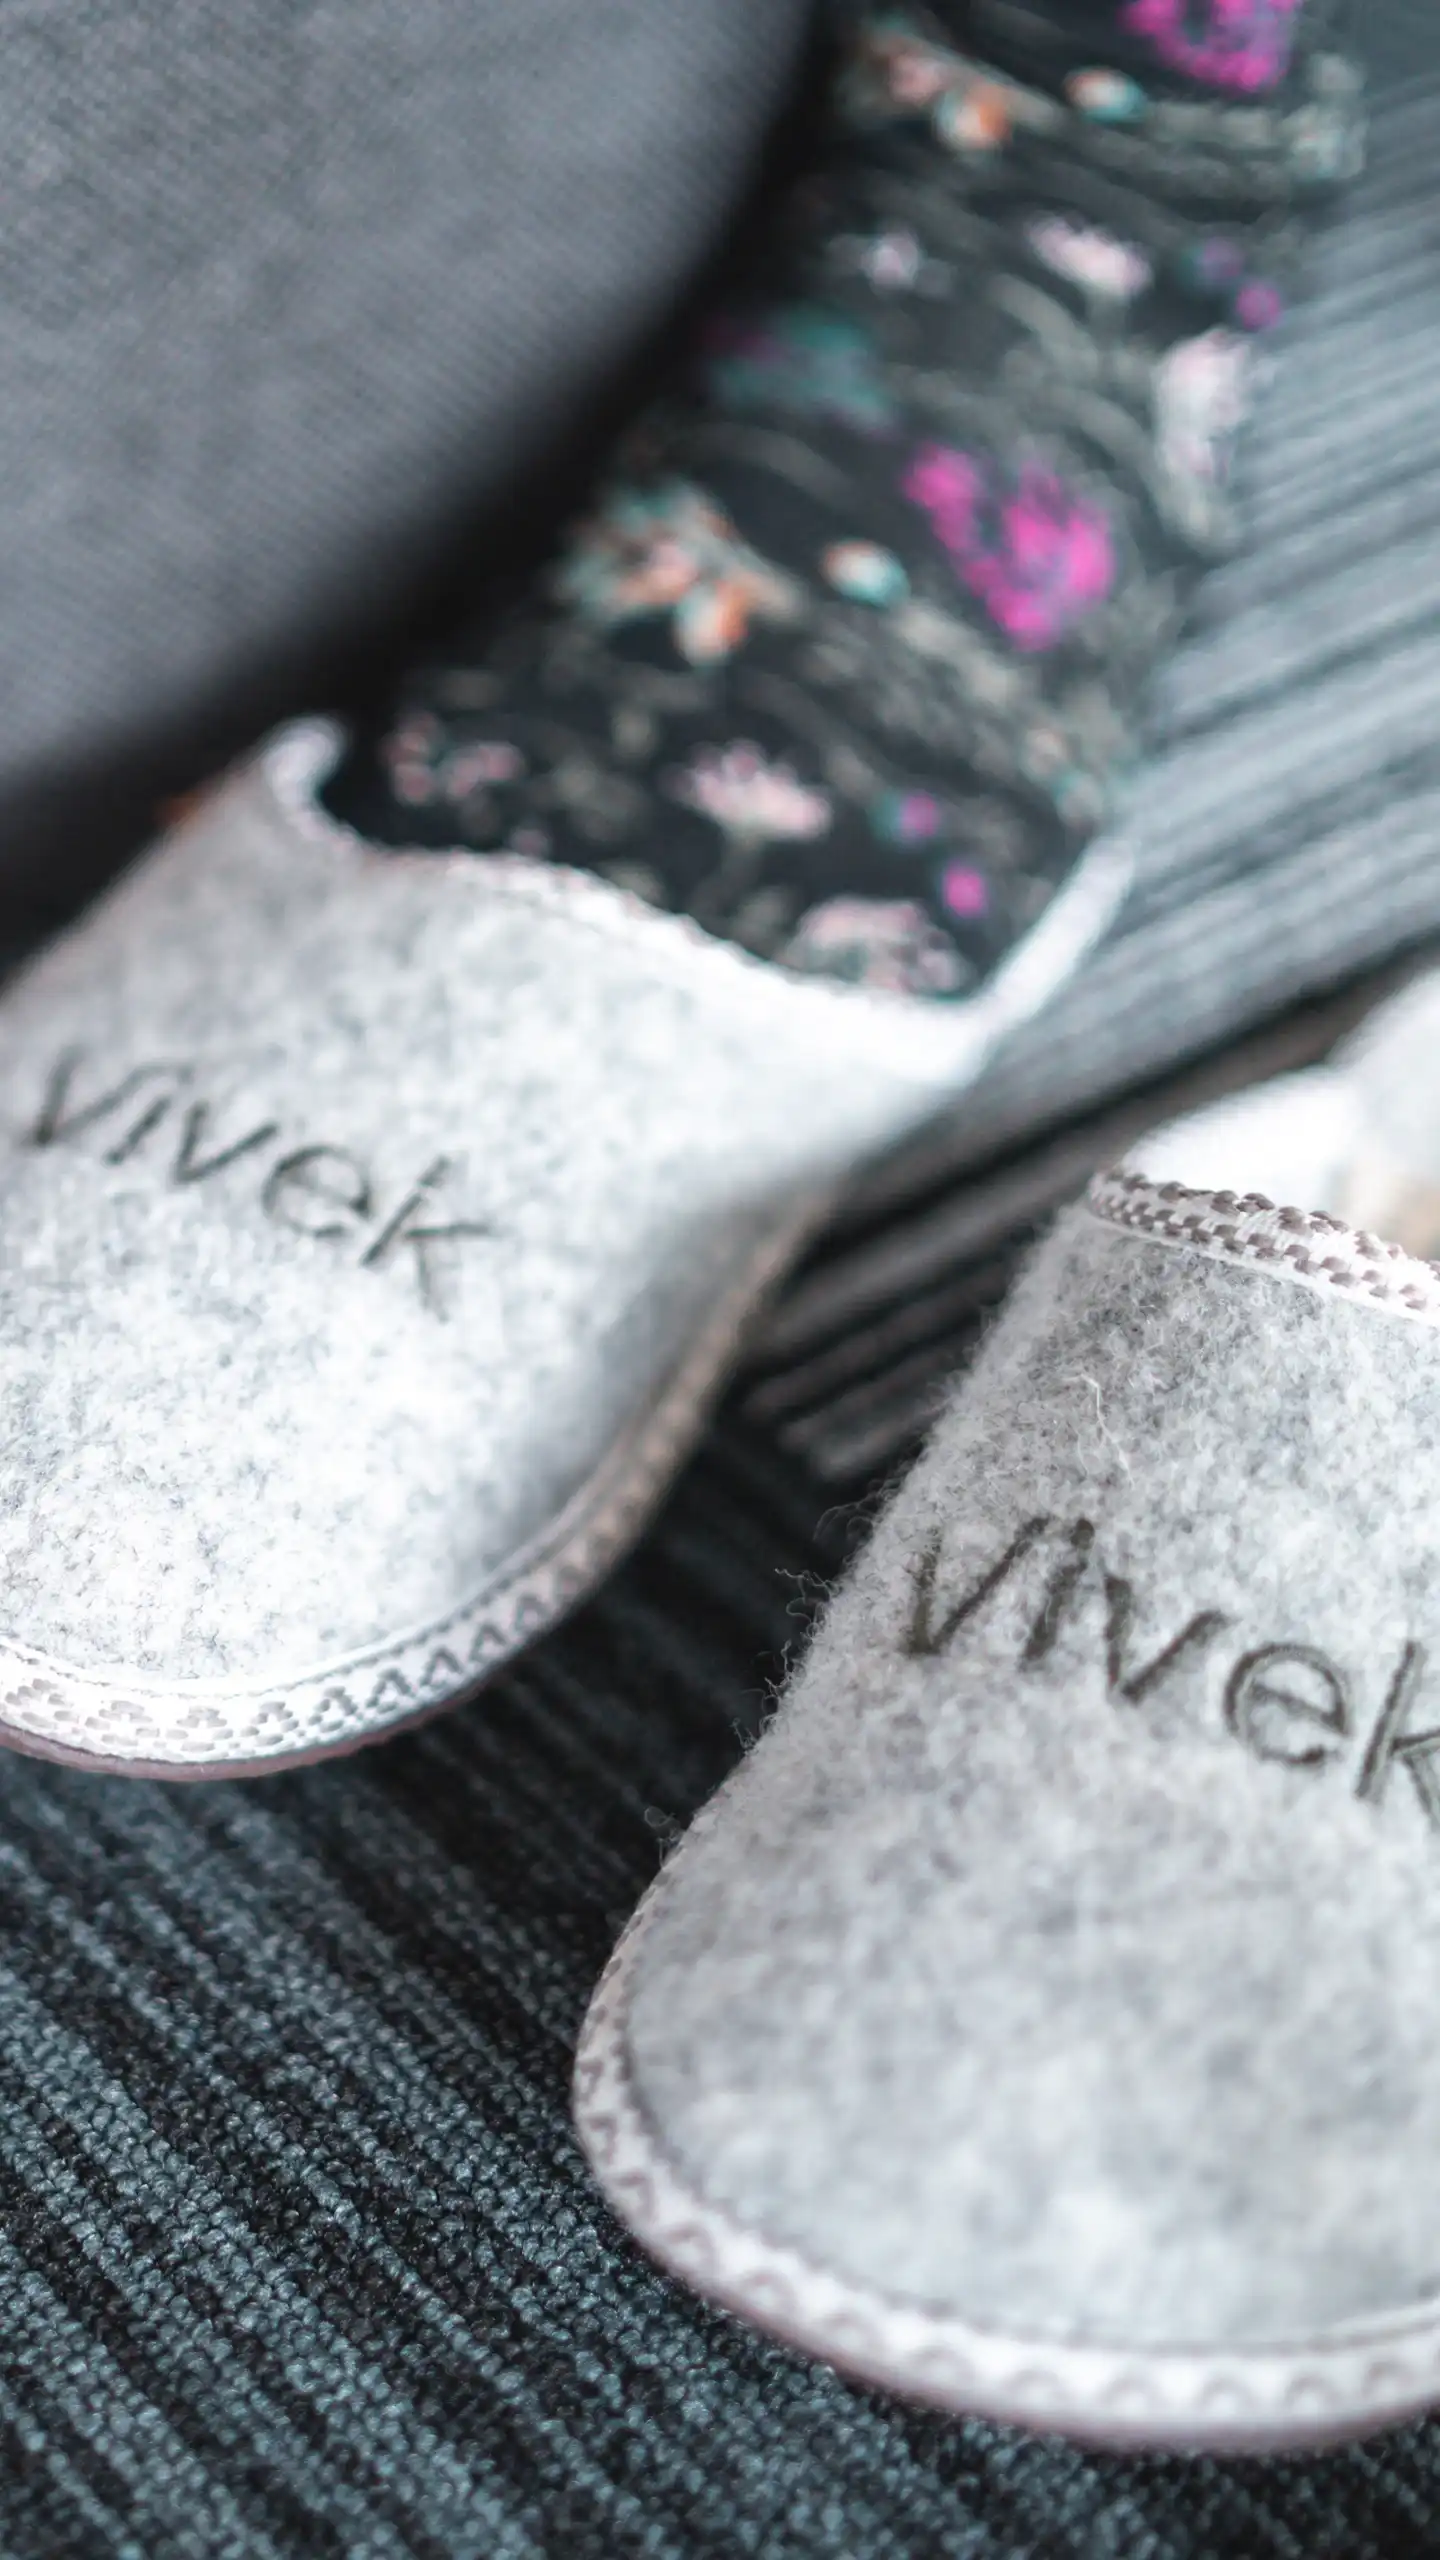 Visioncraft Vivek's slippers